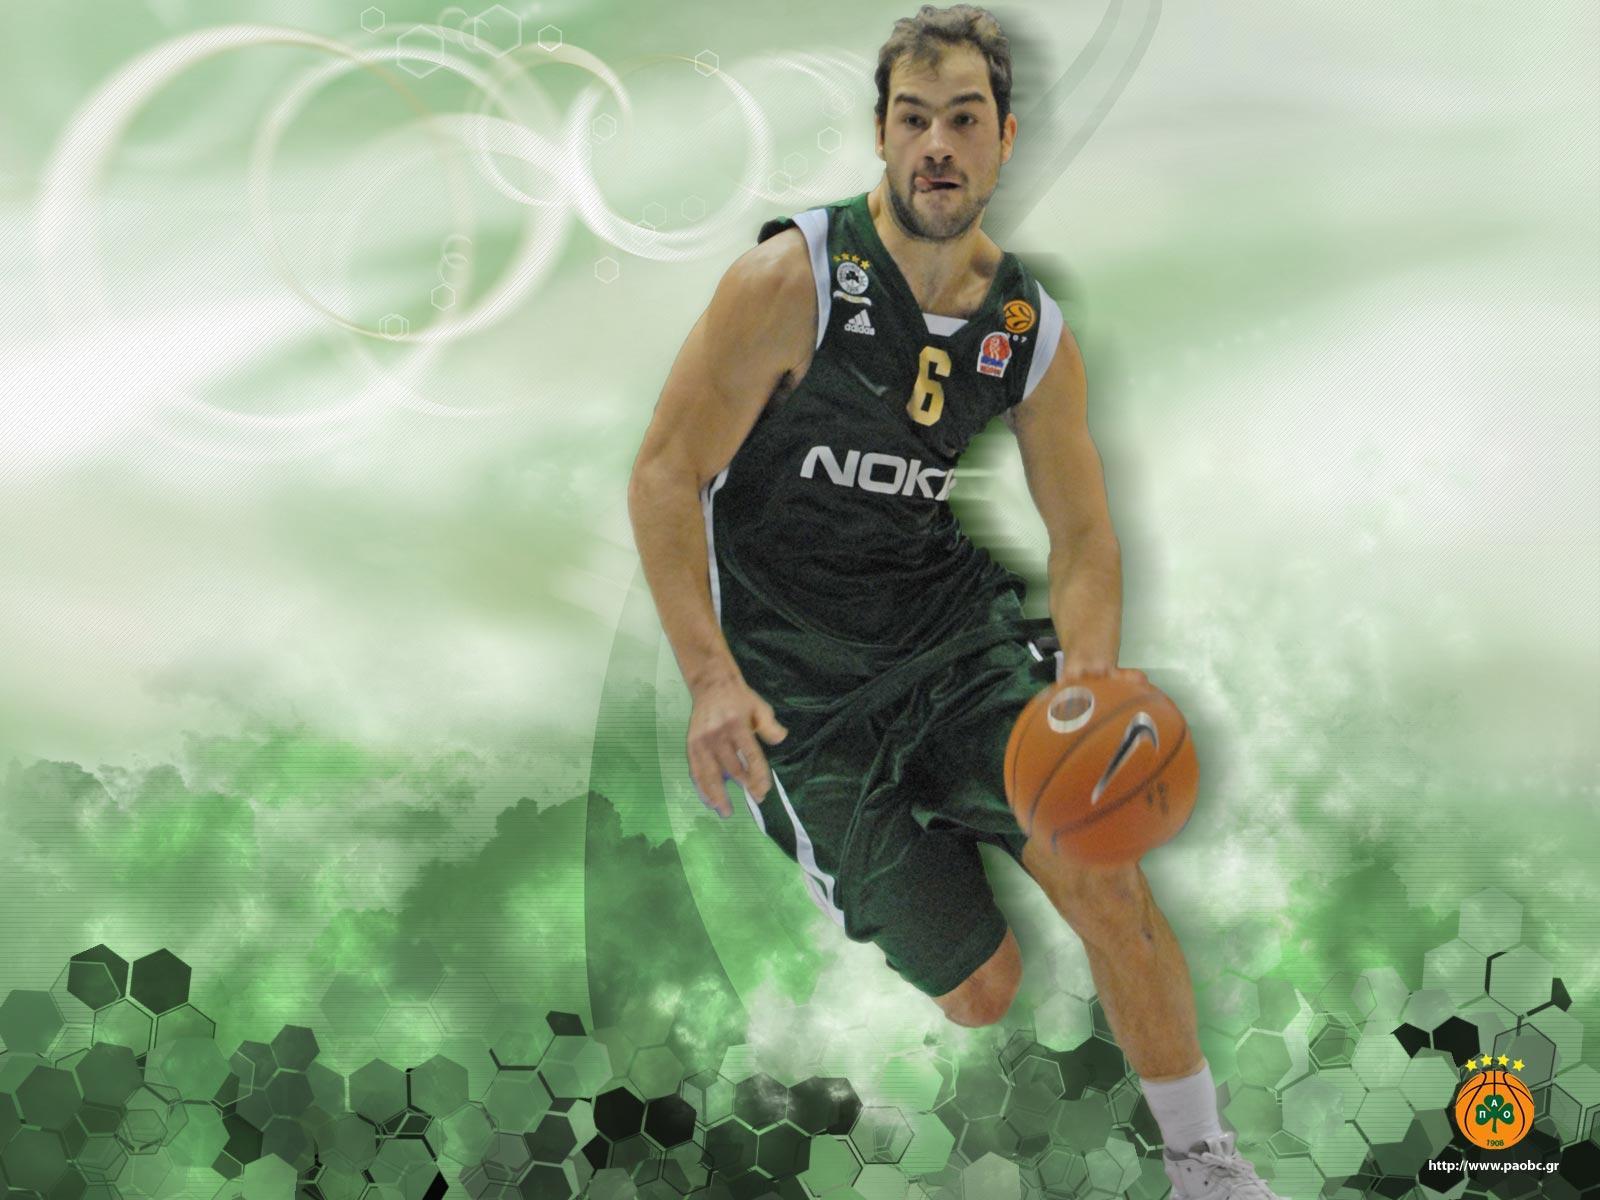 Vasileios Spanoulis PAO Wallpaper. Basketball Wallpaper at